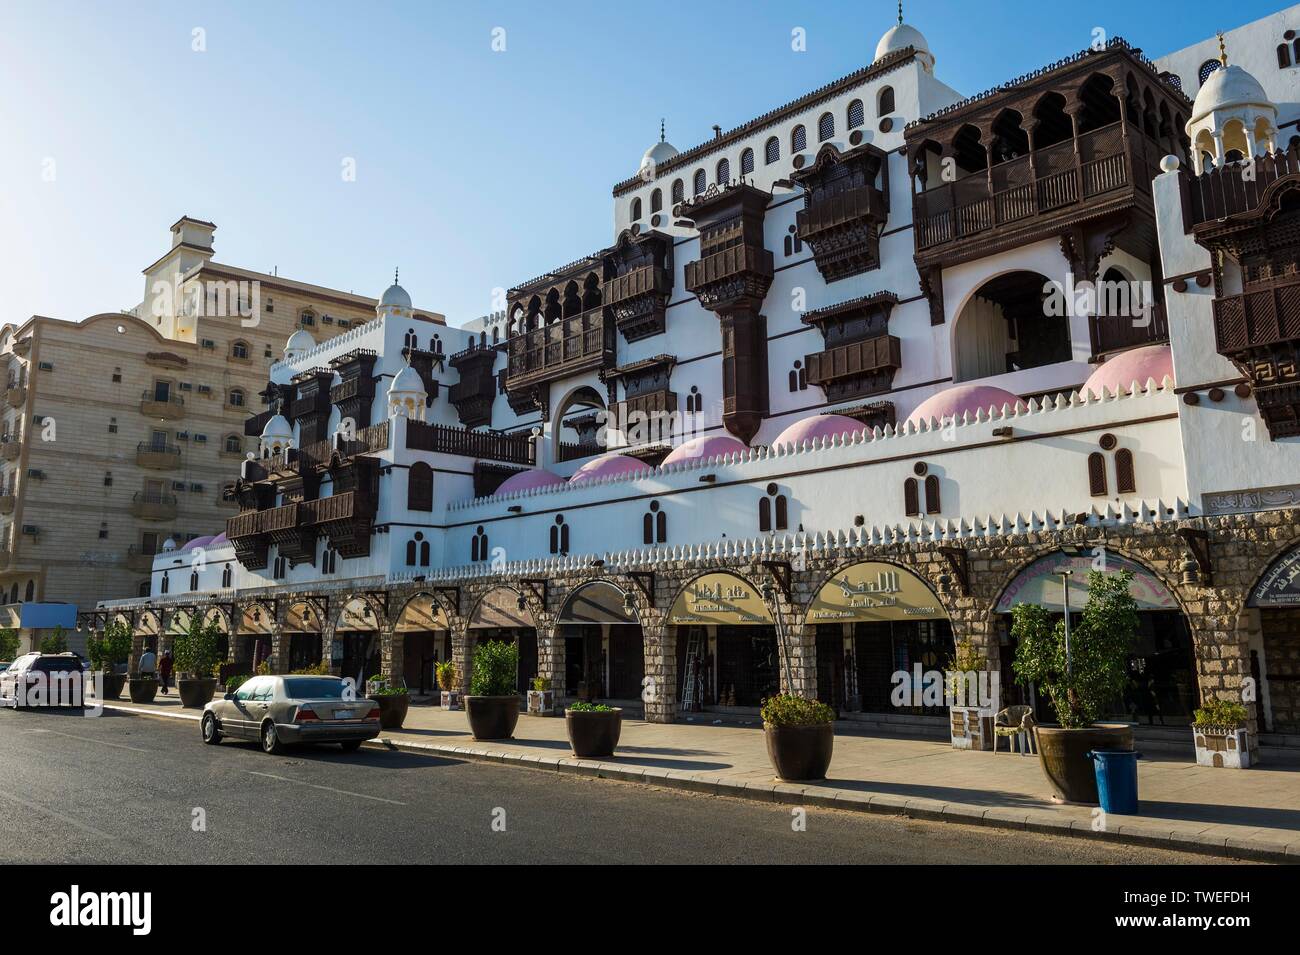 Building Al Taybat City Museum, Old Town, Unesco world heritage sight, Jeddah, Saudi Arabia Stock Photo